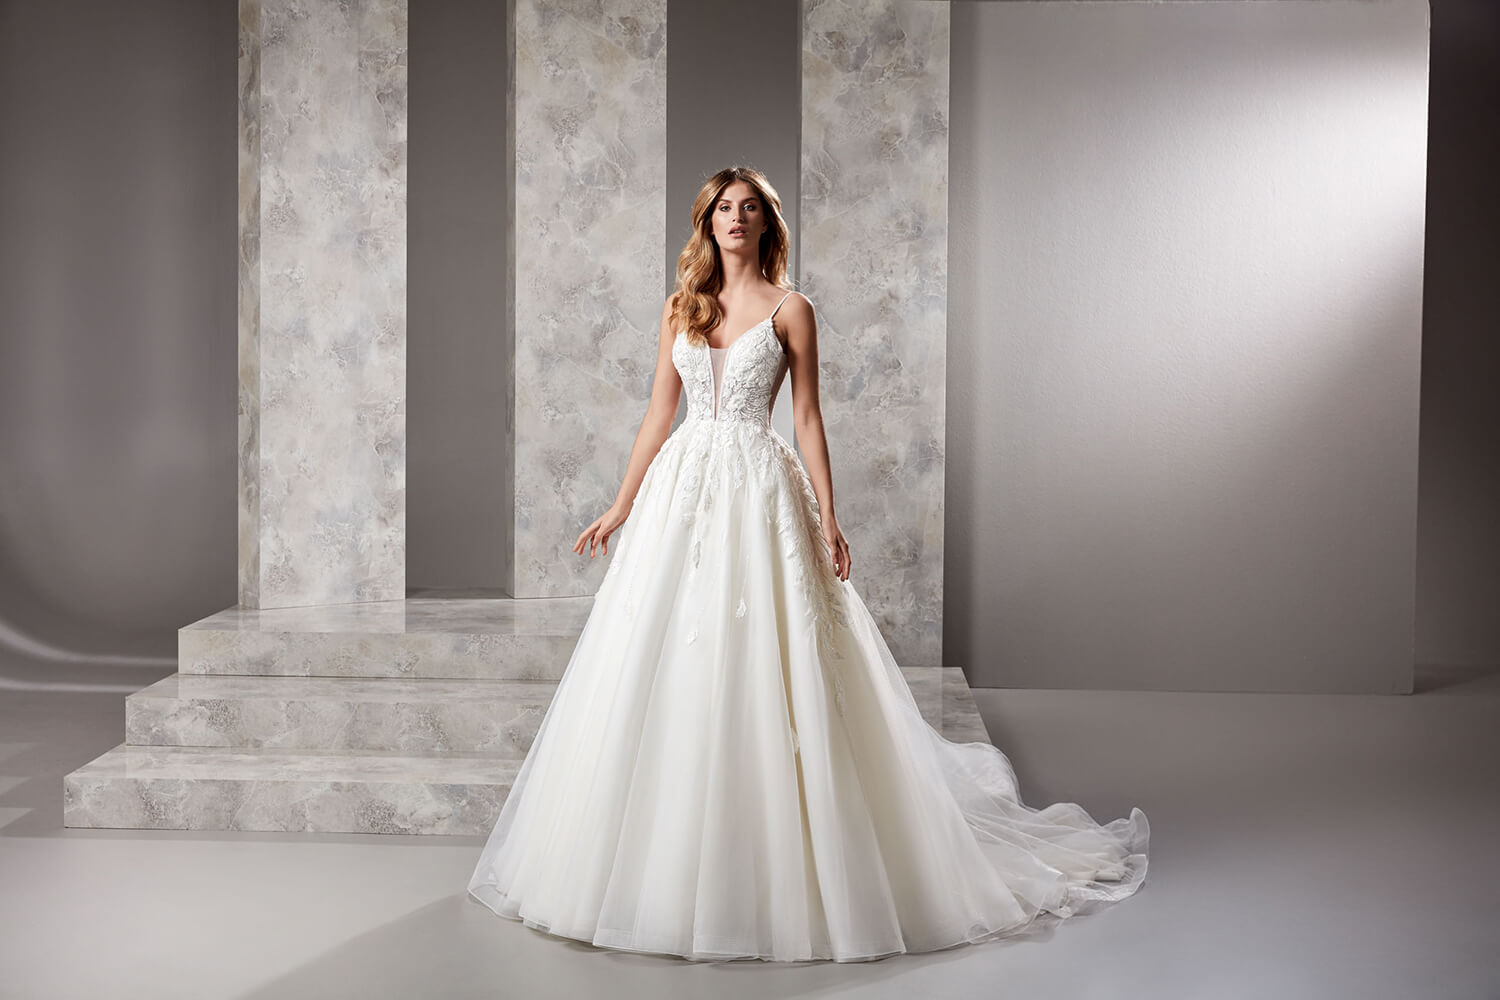 Leaf Patterned Decollete A-Line Wedding Dress with Symmetrical Straps